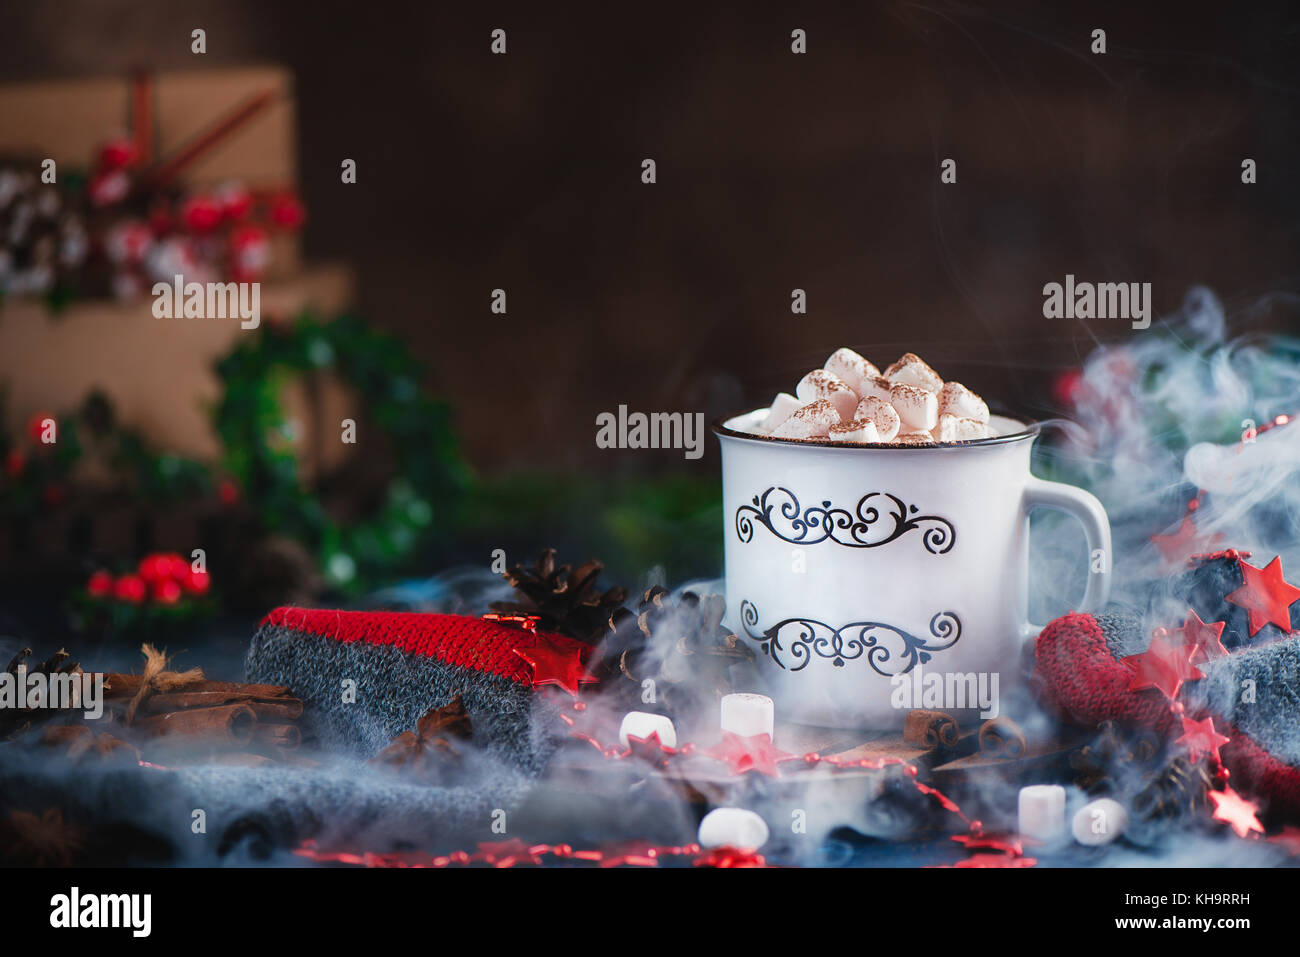 Pouring Hot Chocolate Thermos Mug On Stock Photo 96747052